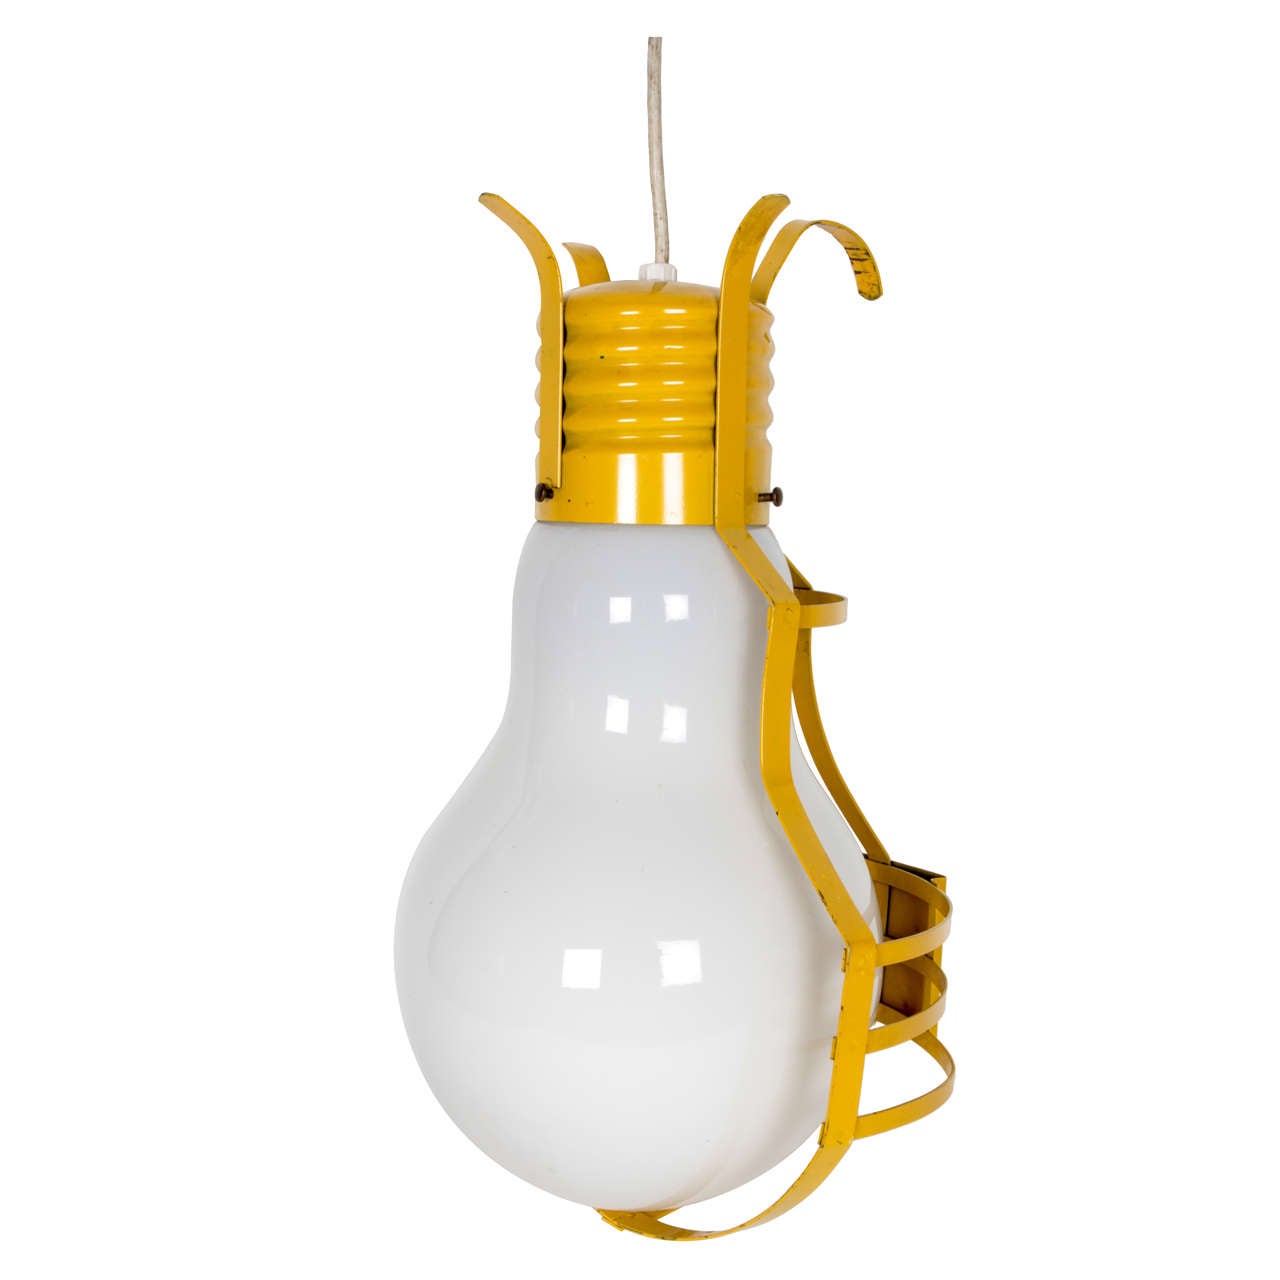 Italian Design "Pop-Art" Oversized "Anywhere" Lamp Circa 1960’s-1970’s For Sale